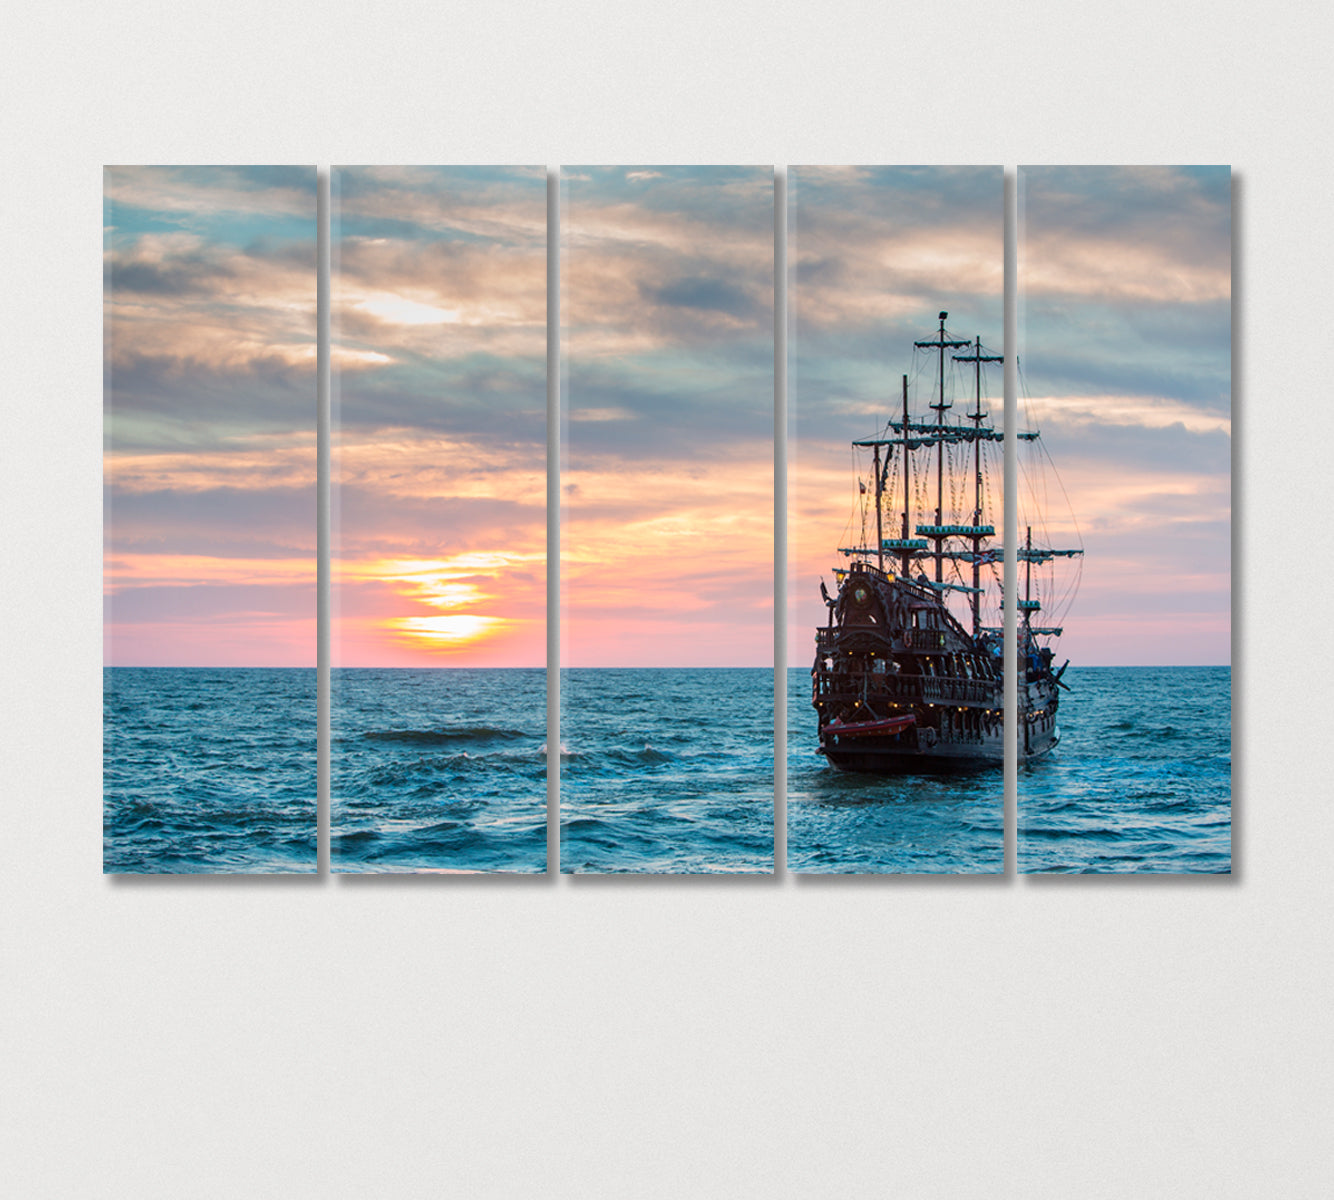 Old Ship in Sea at Sunset Canvas Print-Canvas Print-CetArt-5 Panels-36x24 inches-CetArt